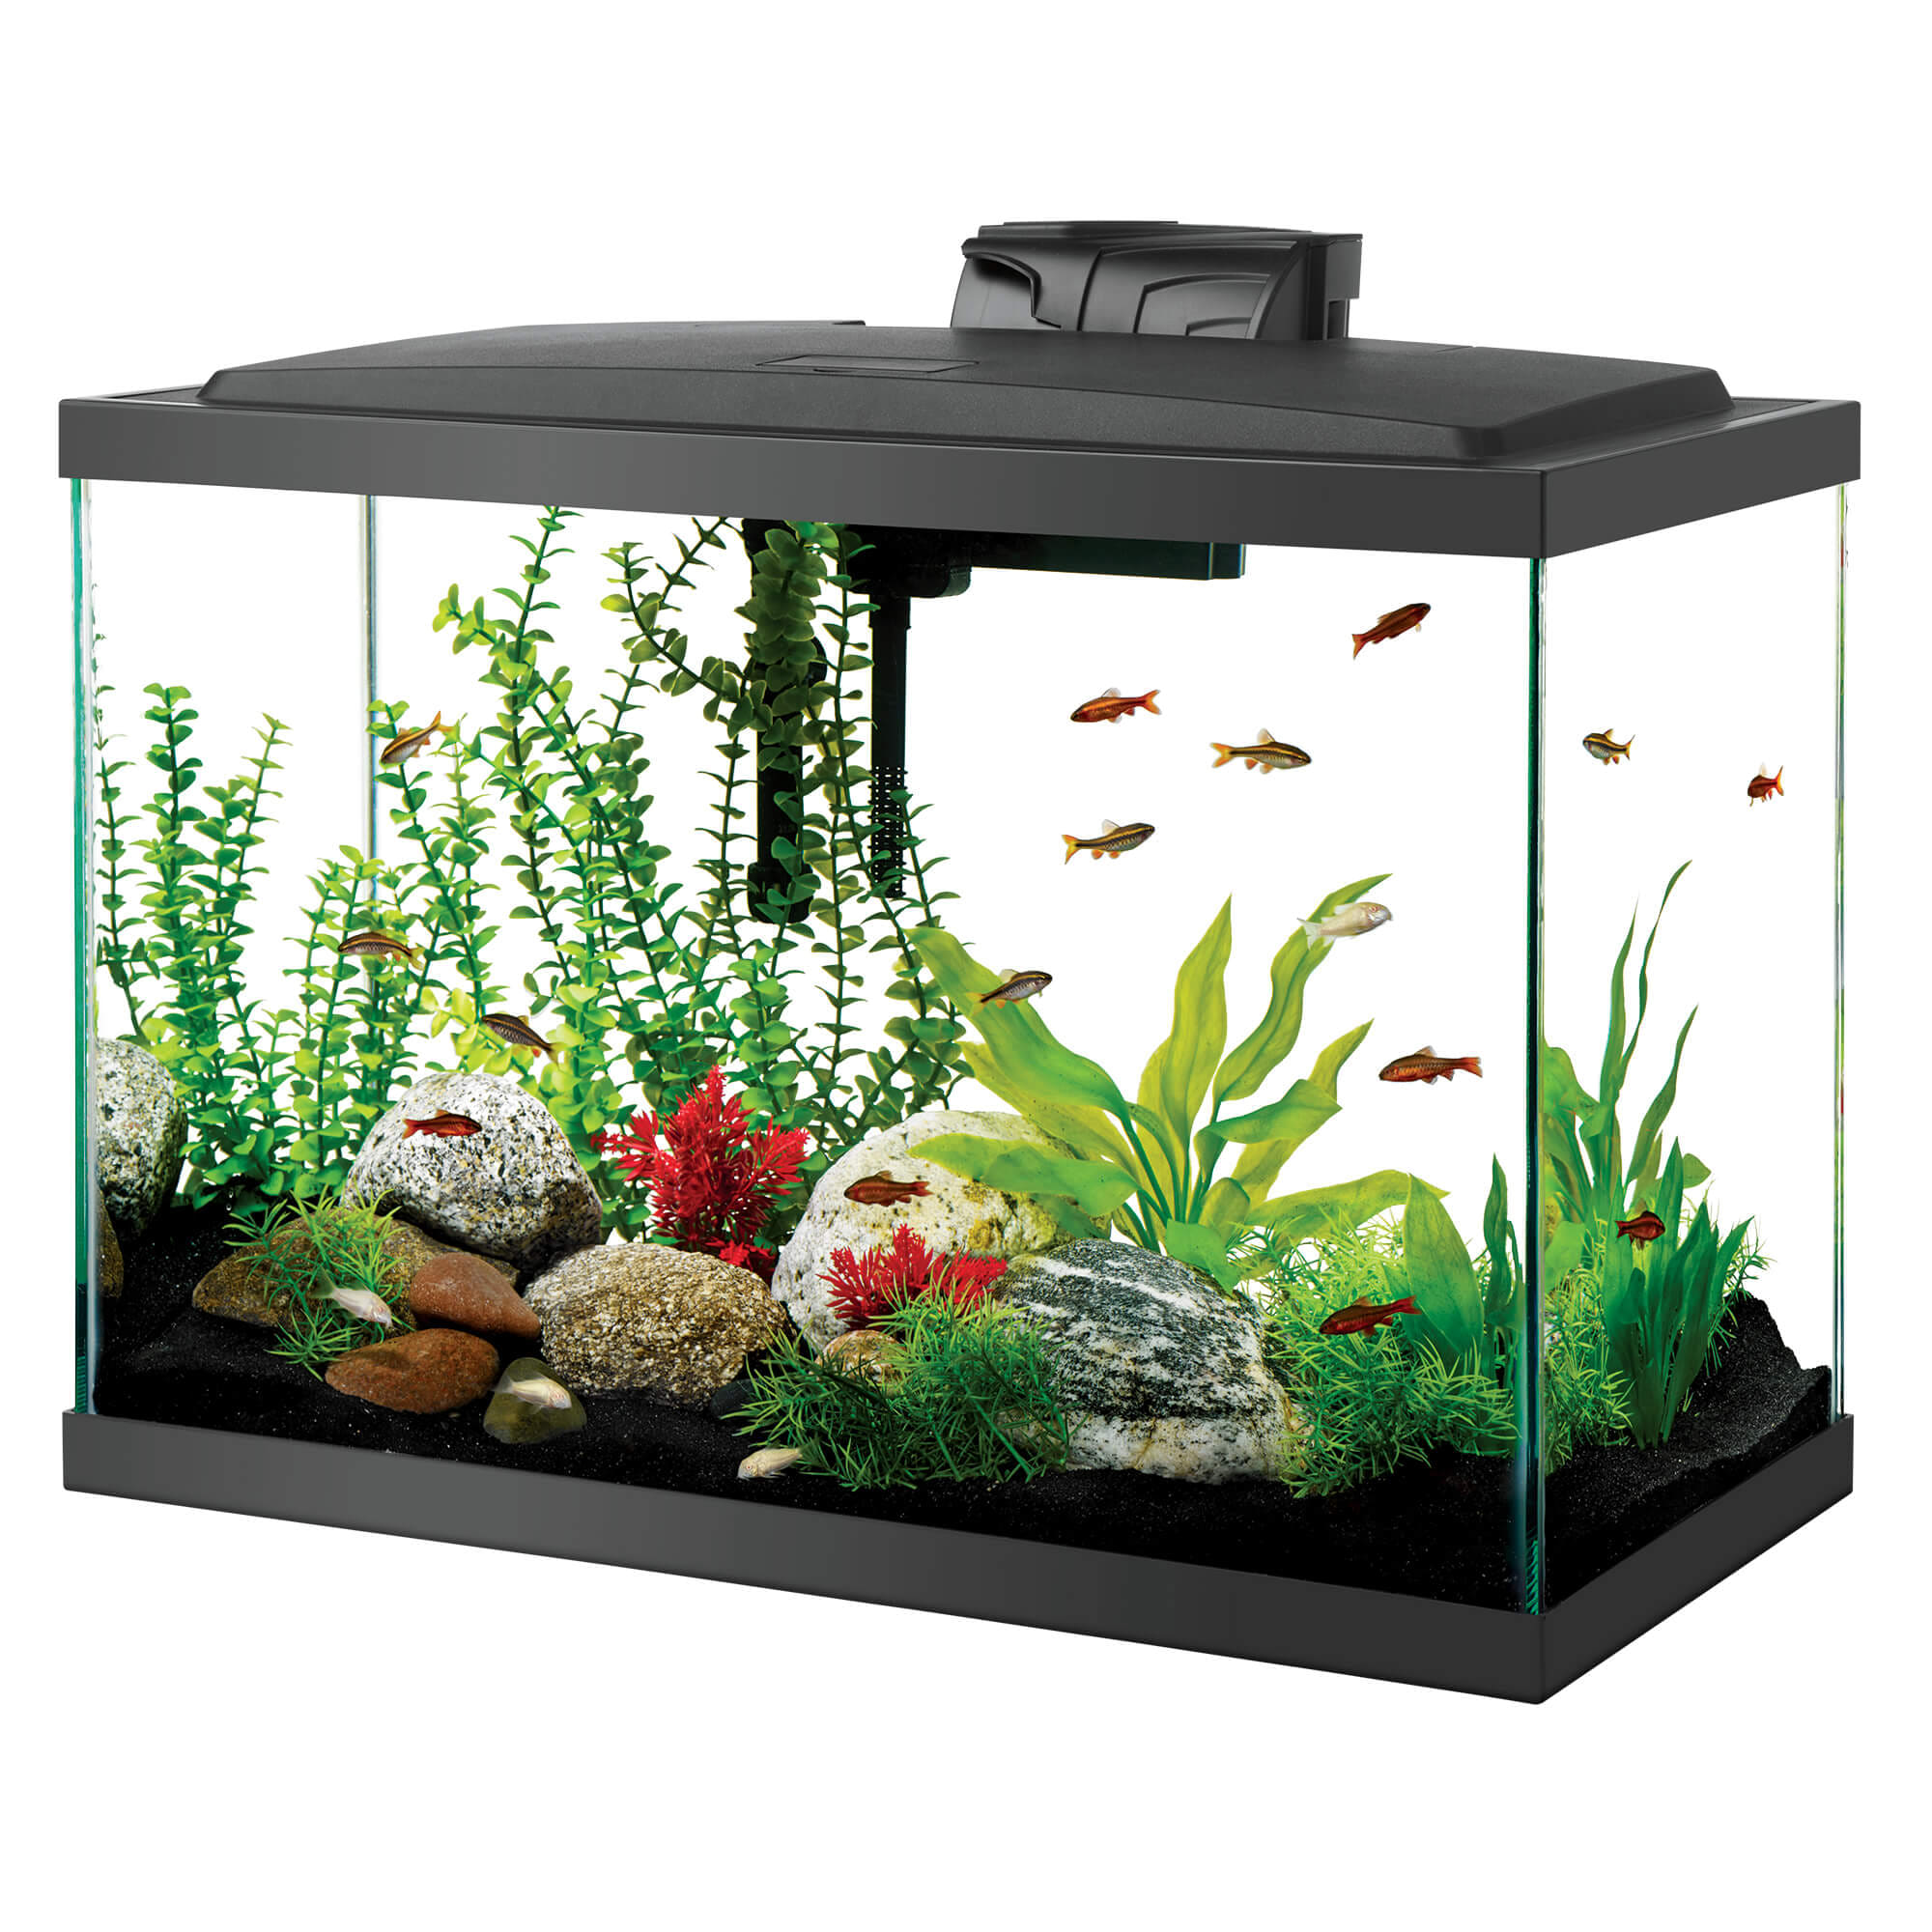 aqueon 15 gallon led aquarium kit